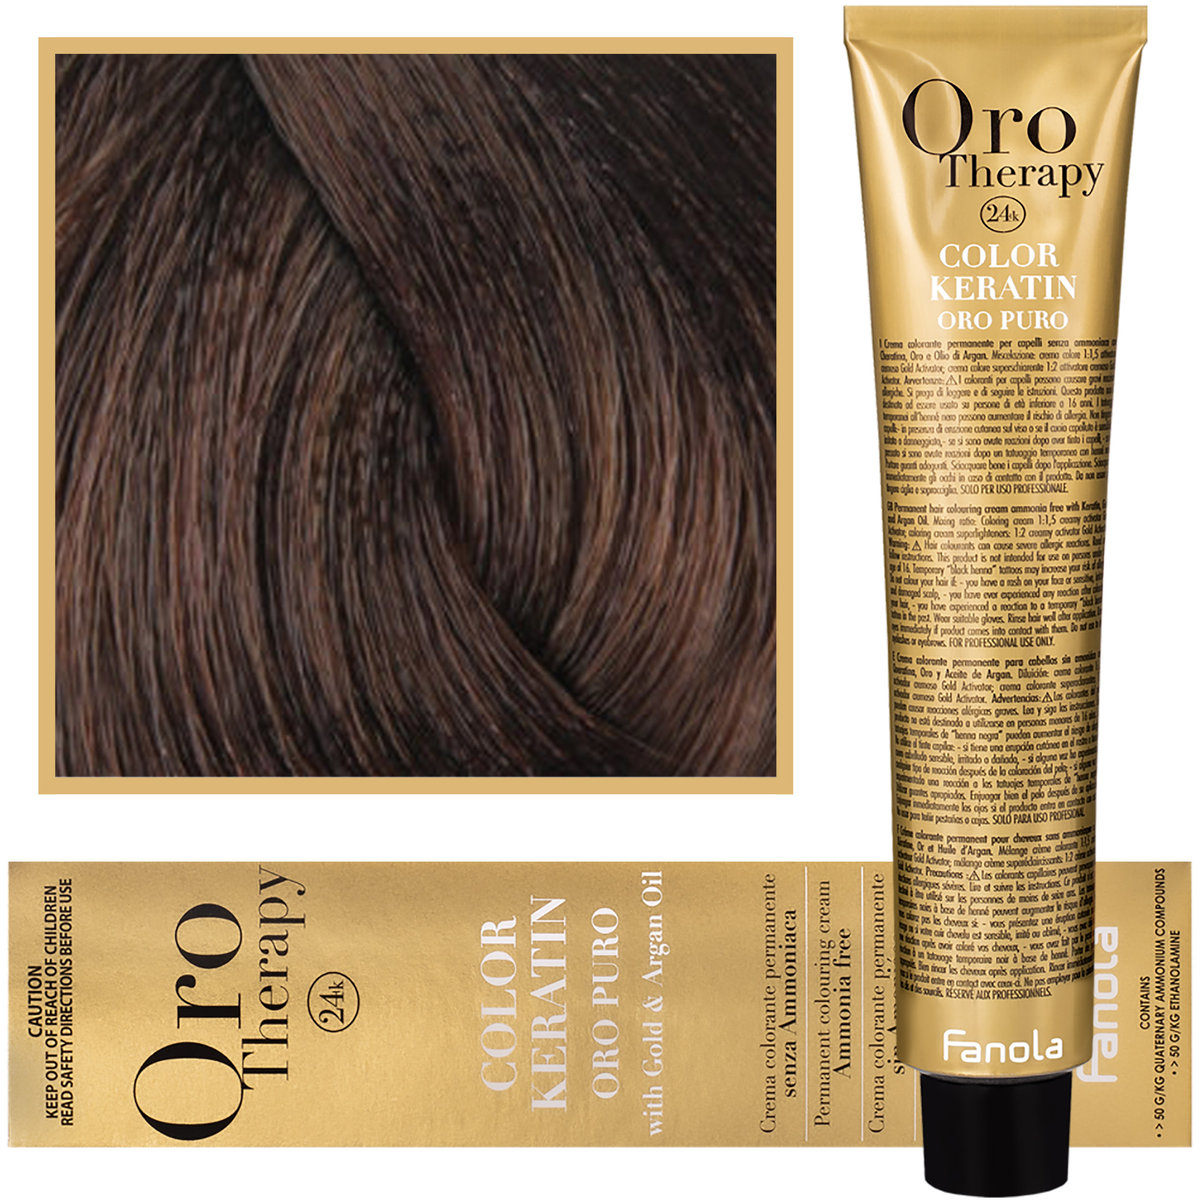 Фото - Фарба для волосся Fanola, Oro Therapy, Color Keratin Oro Puro, 5,3, farba do włosów, 100 ml